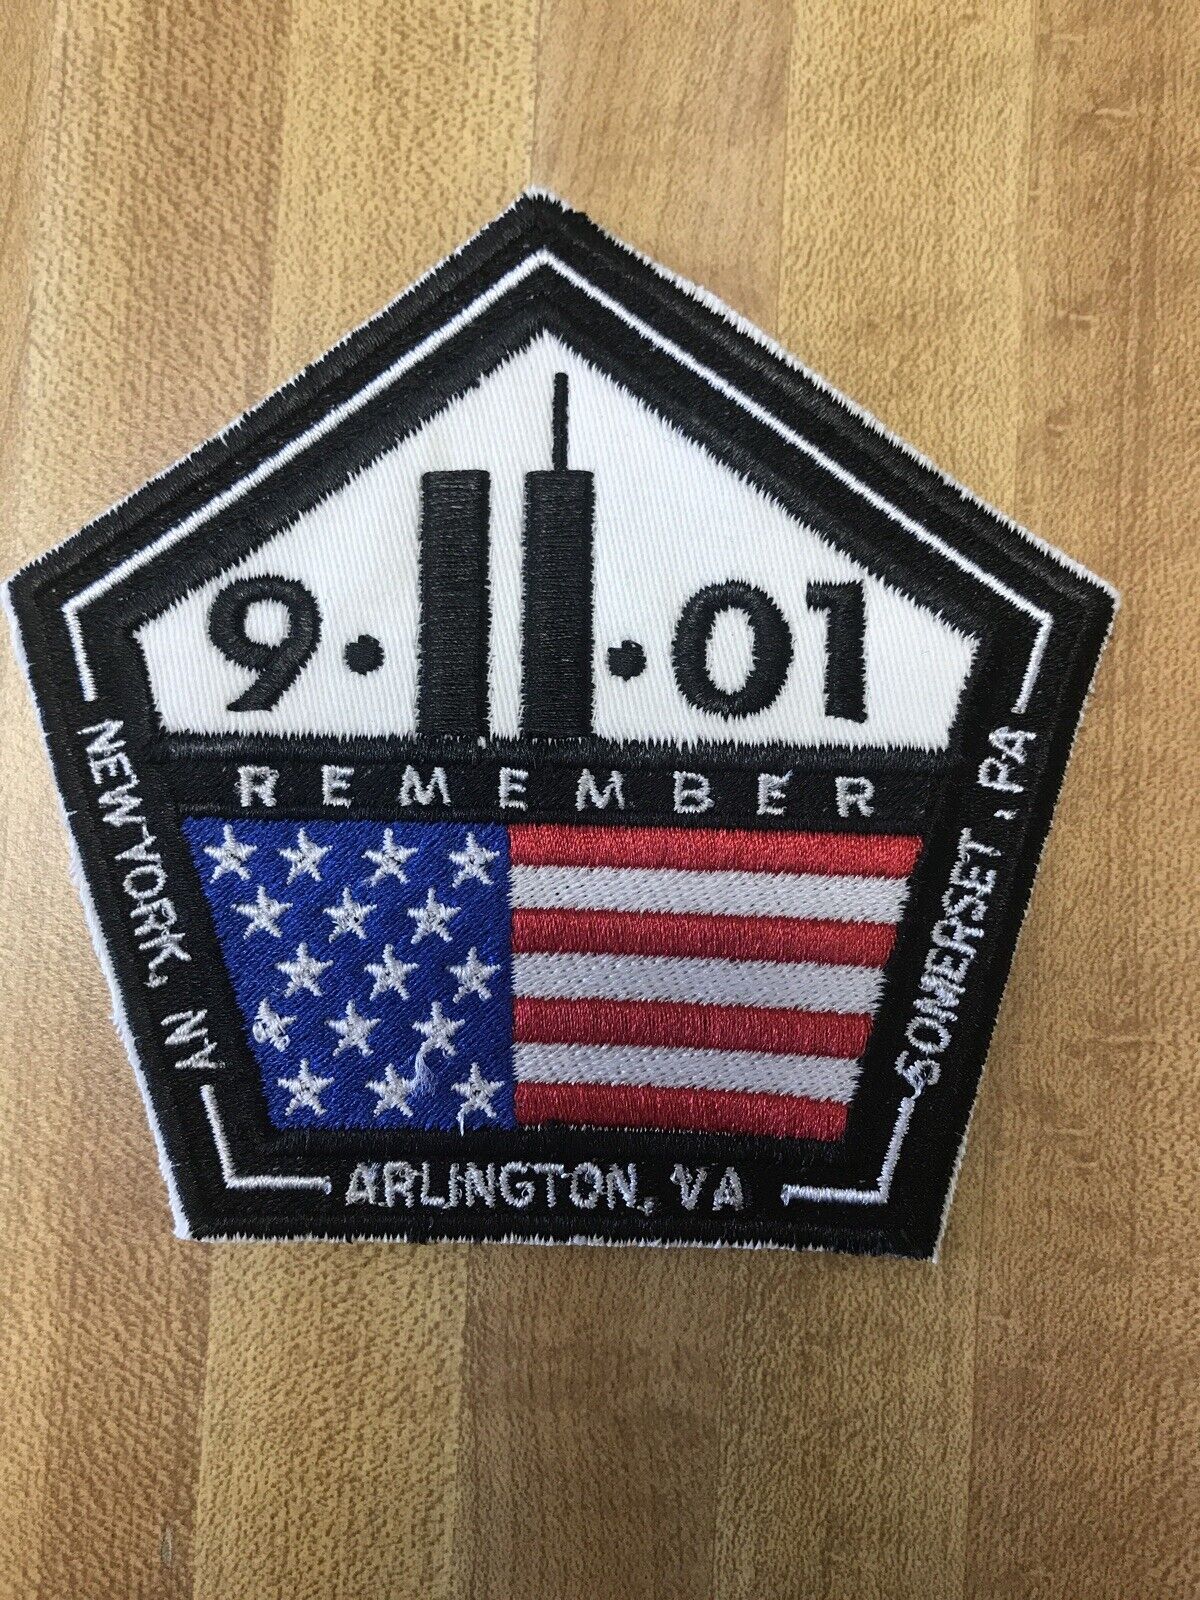 9-11-01 Remember Biker Patch